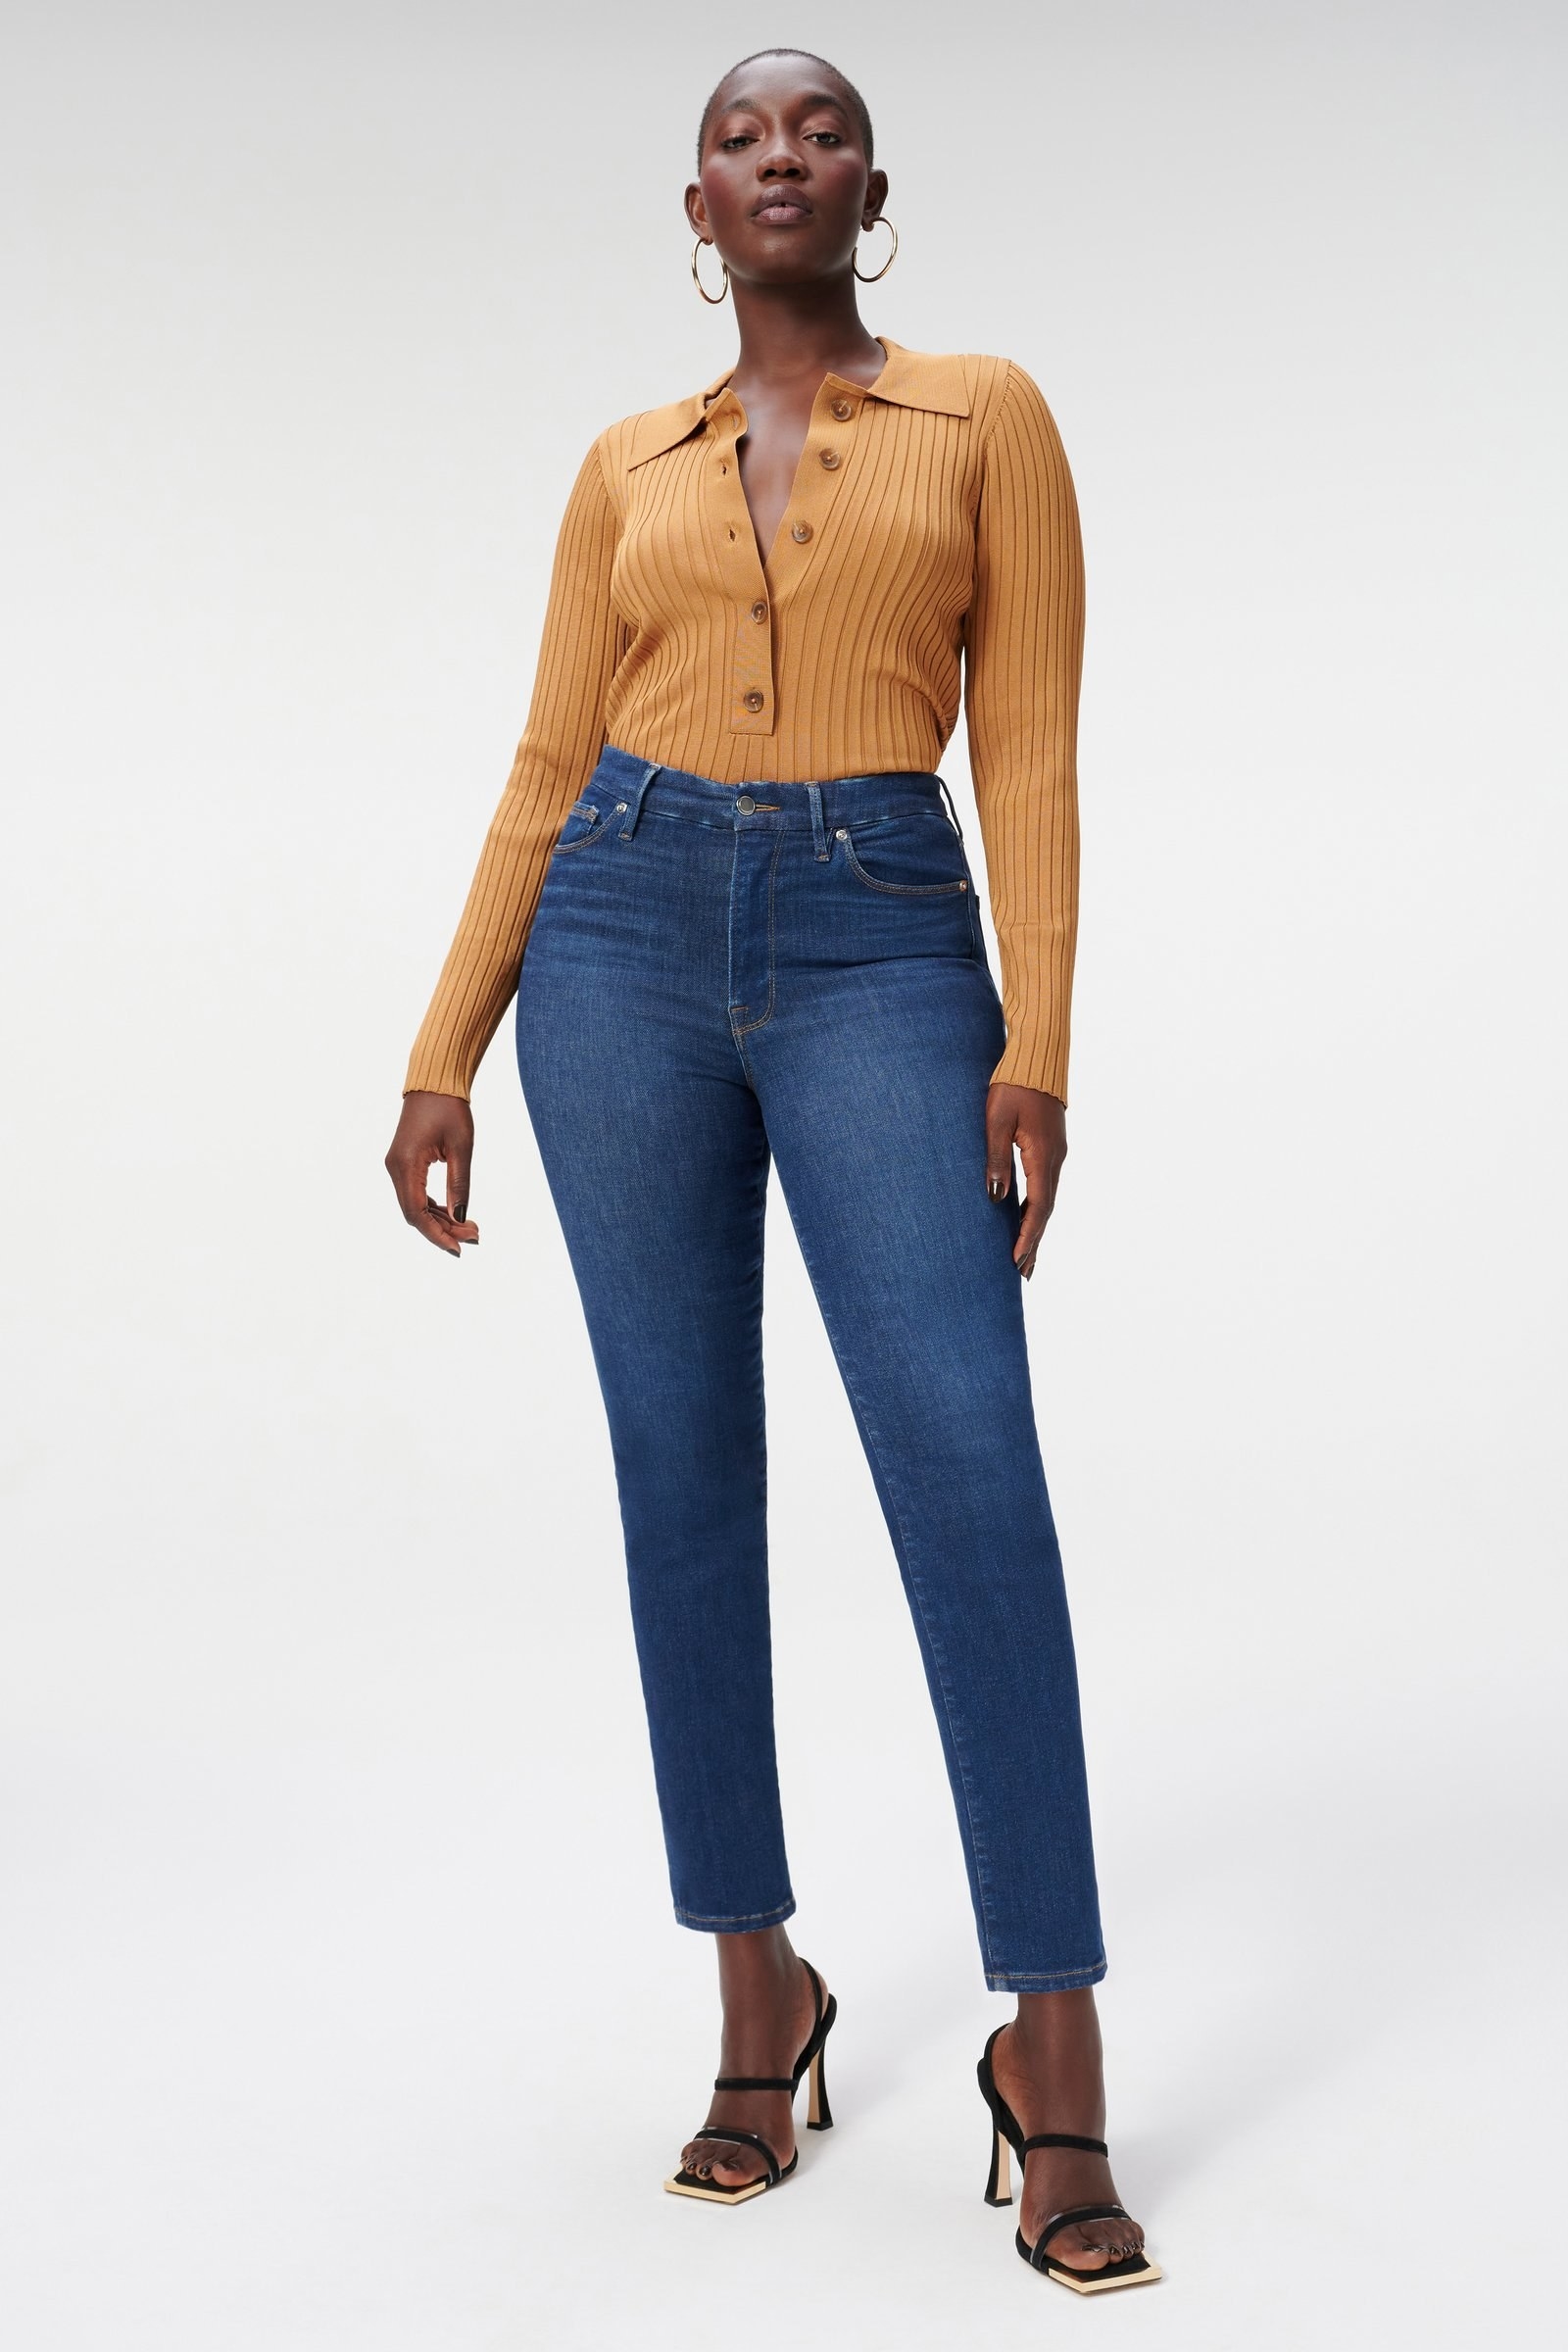 a model in blue skinny jeans